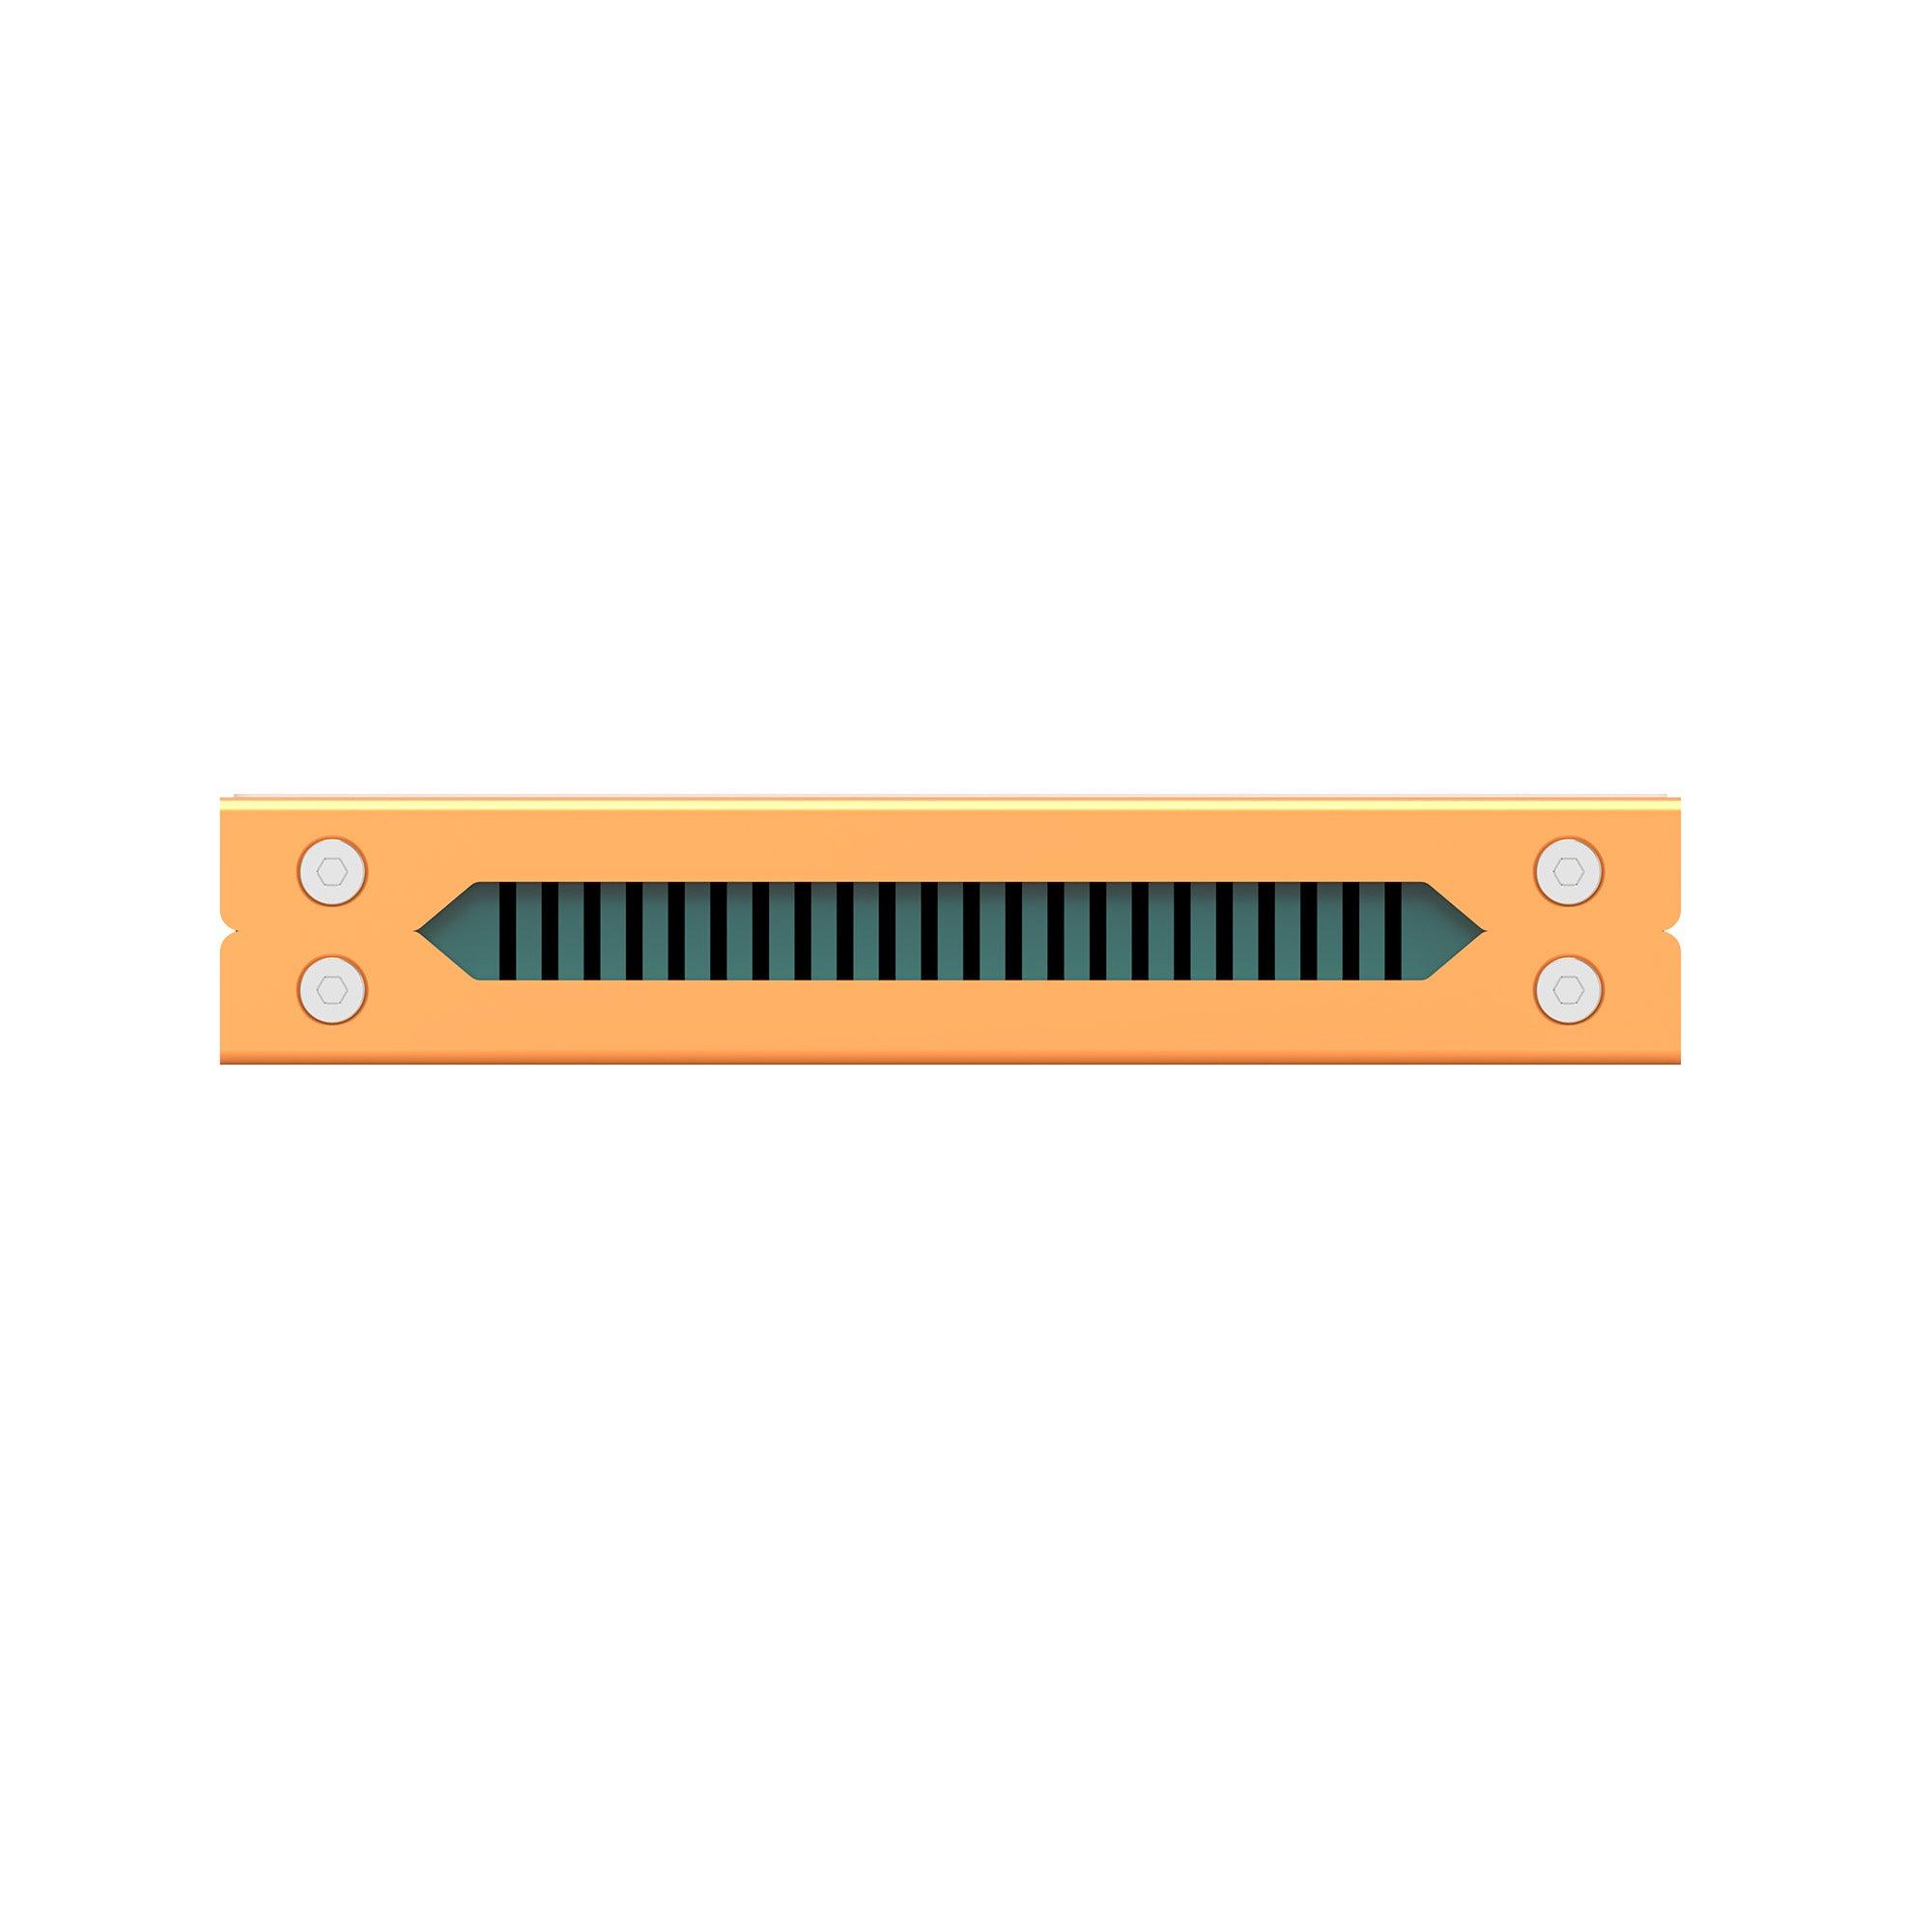 AVMATRIX UC2218-4K DUAL HDMI TO USB3.1 Gen 1 broadcast-grade Video Capture Card - Vitopal